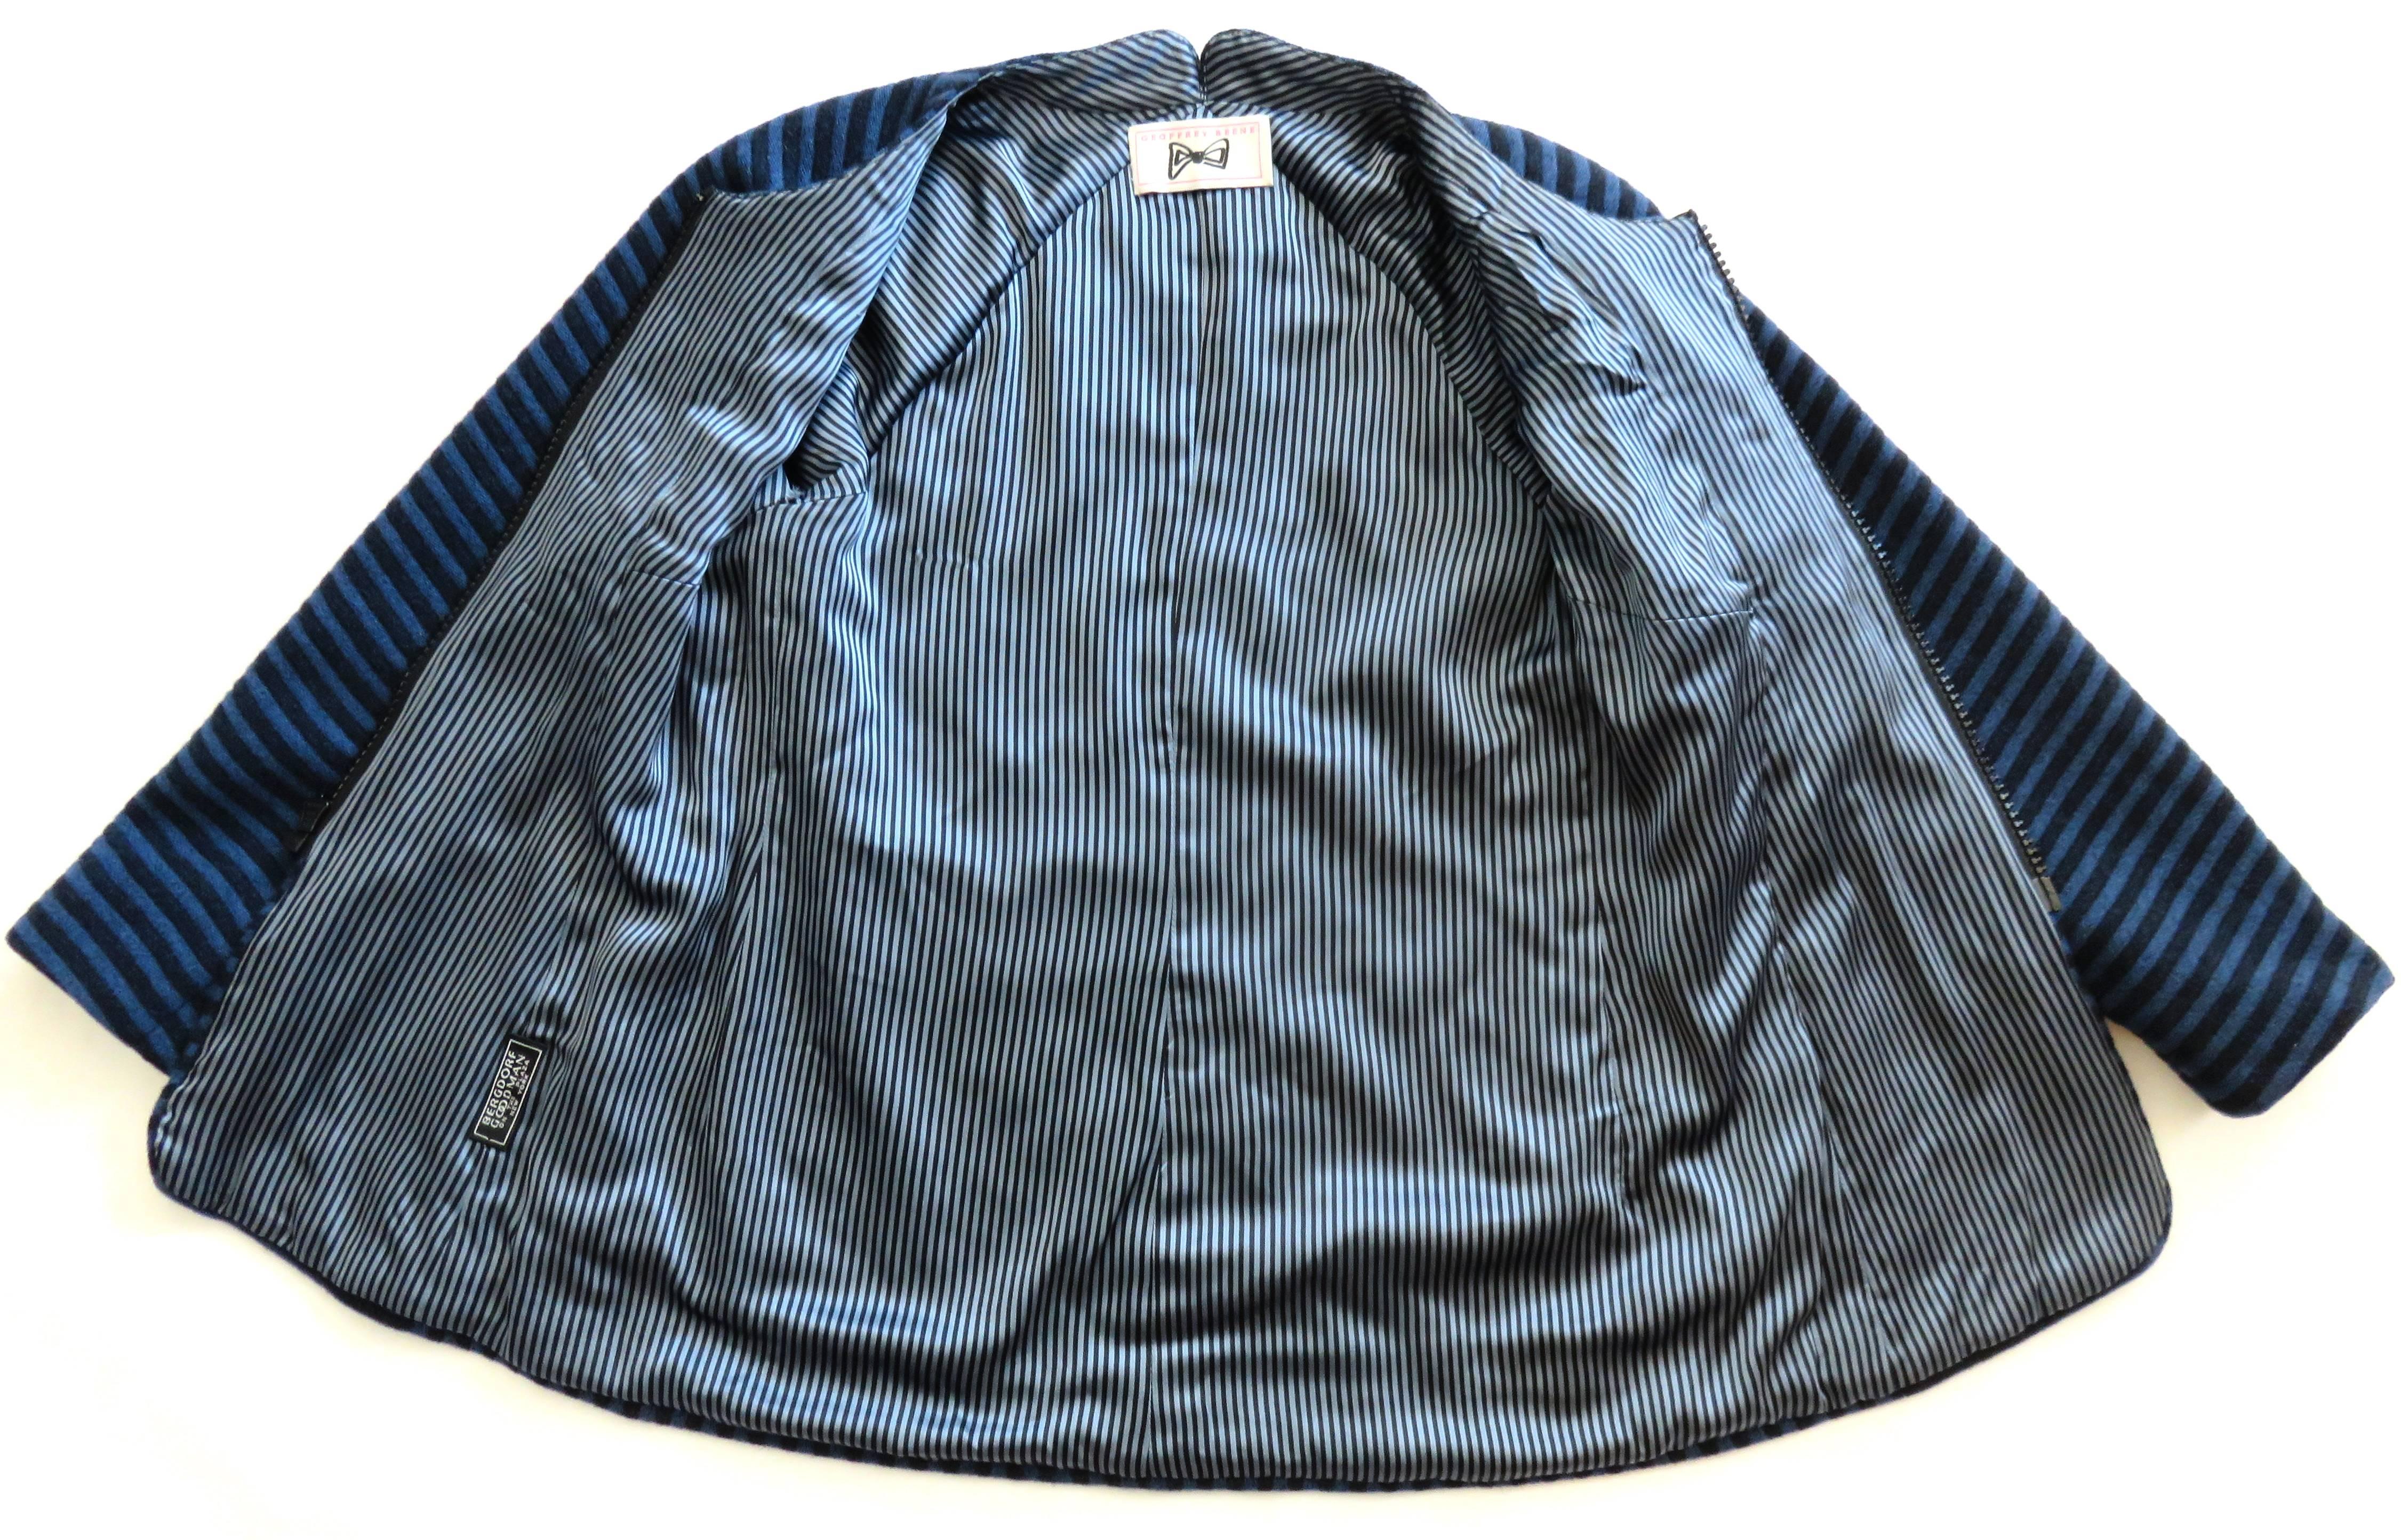 1995 GEOFFREY BEENE Striped wool skirt suit For Sale 4